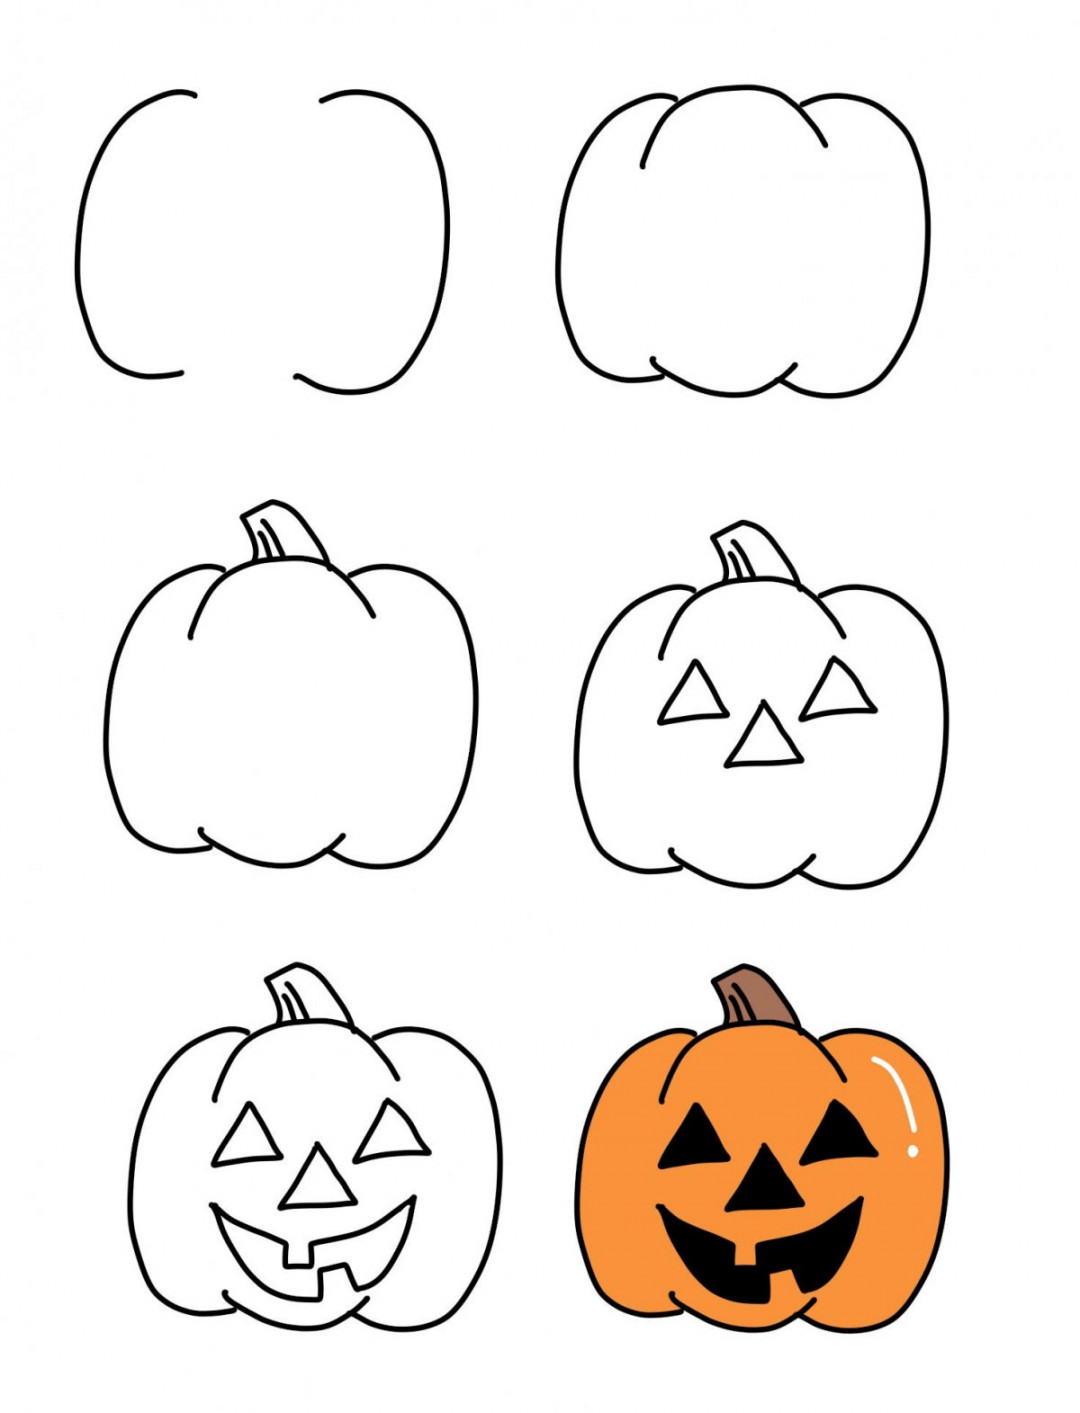 Easy Halloween Doodles Anyone Can Draw - Amy Latta Creations